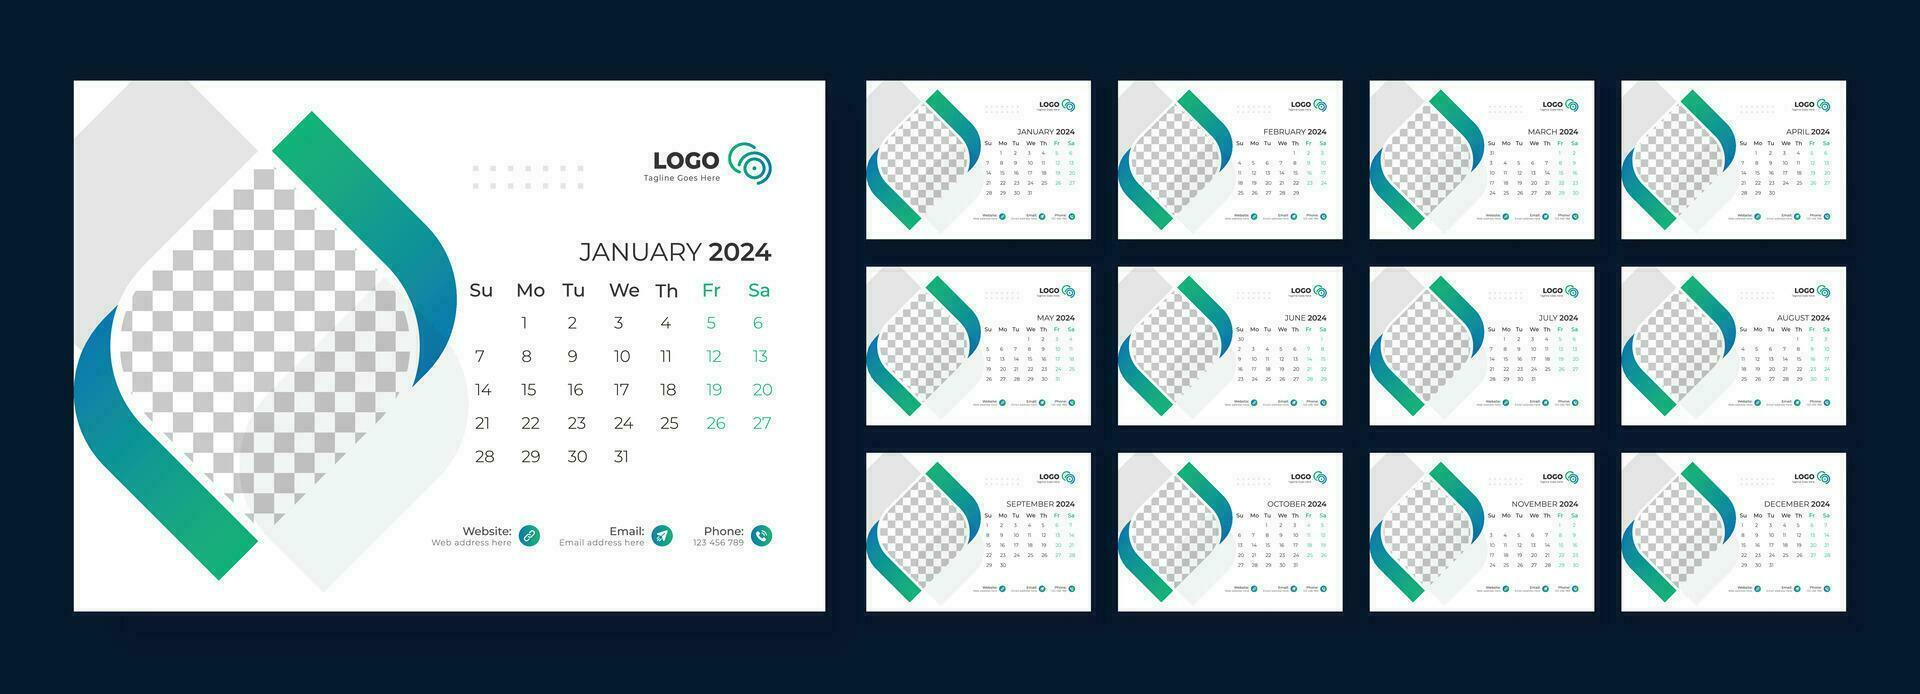 Desk Calendar 2024. Template for annual calendar 2024. Desk calendar calendar in a minimalist style. vector